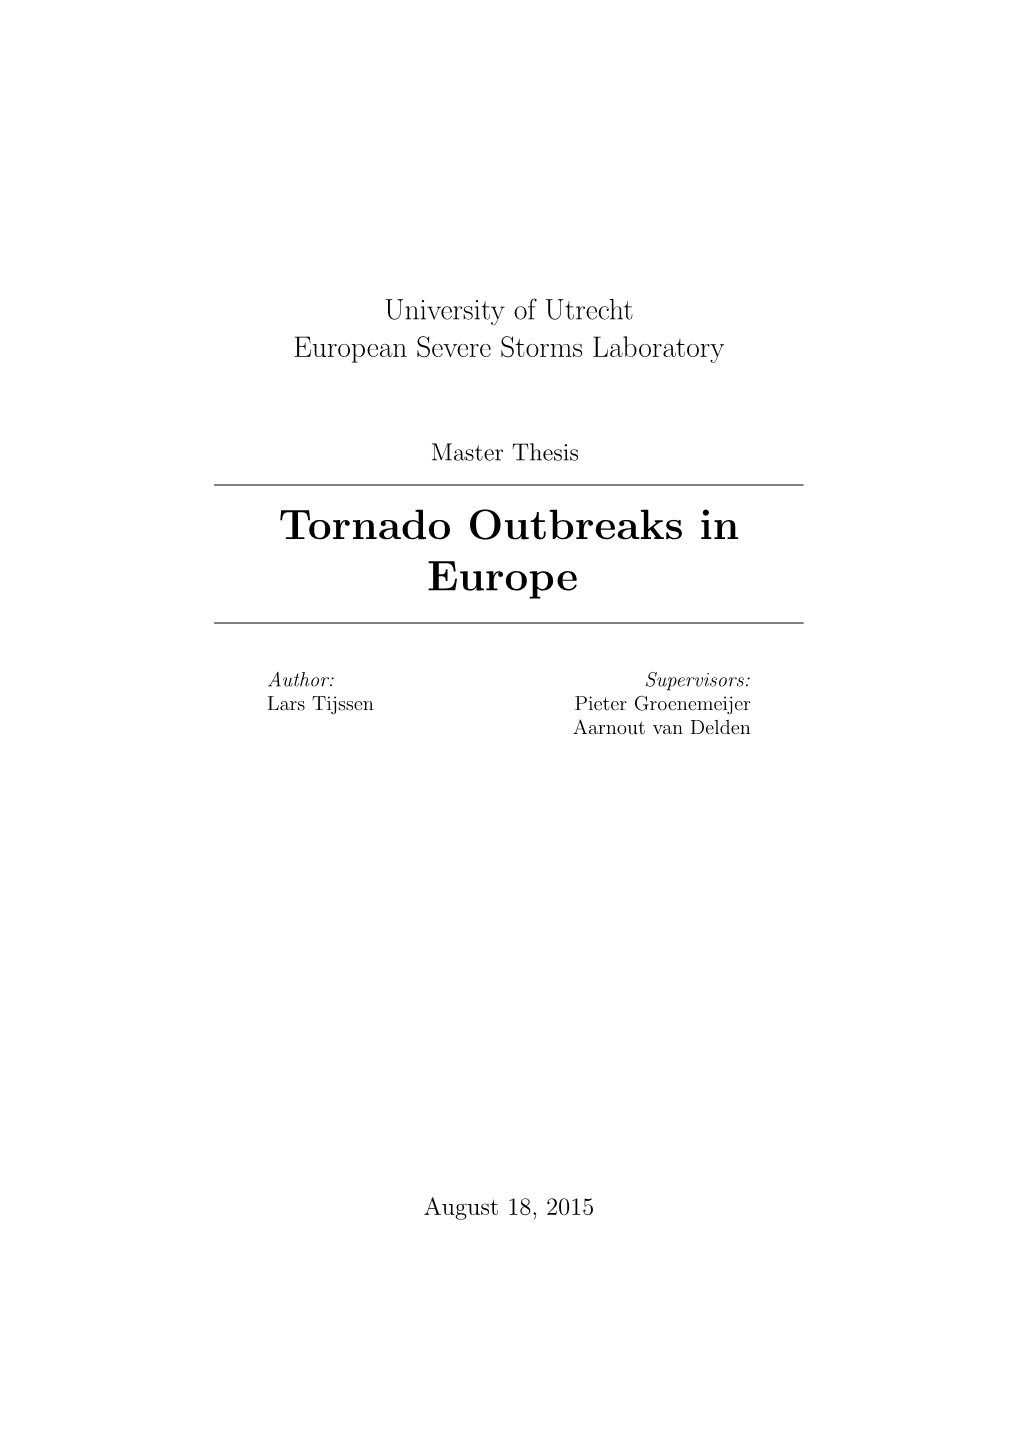 Tornado Outbreaks in Europe